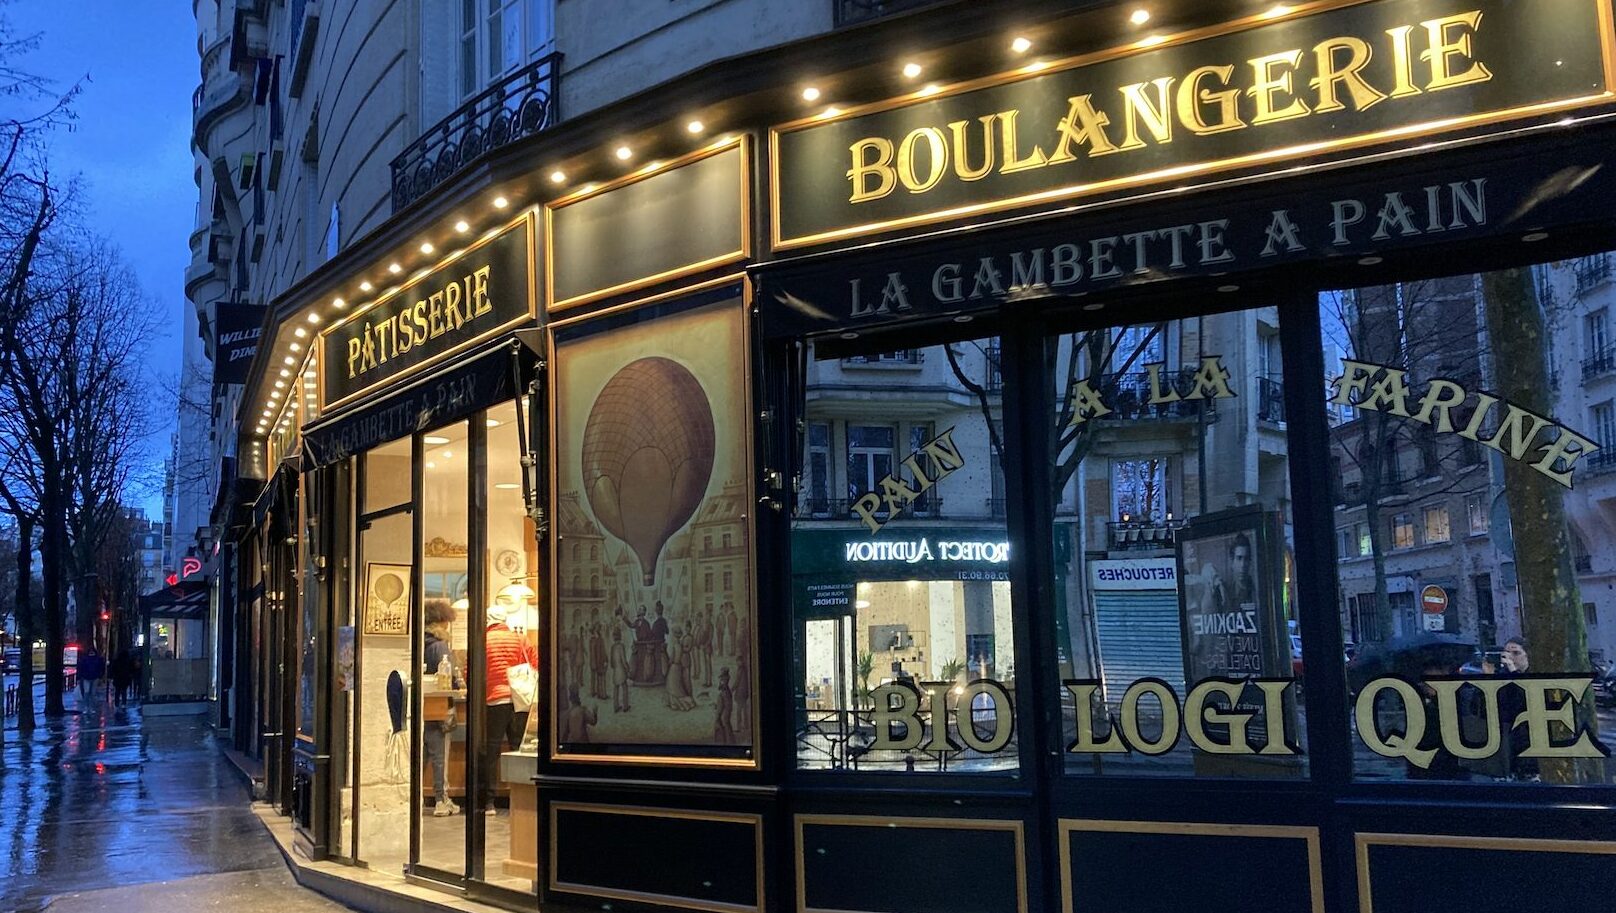 The lit-up facade of La Gambette à Pain bakery in Paris at dusk.